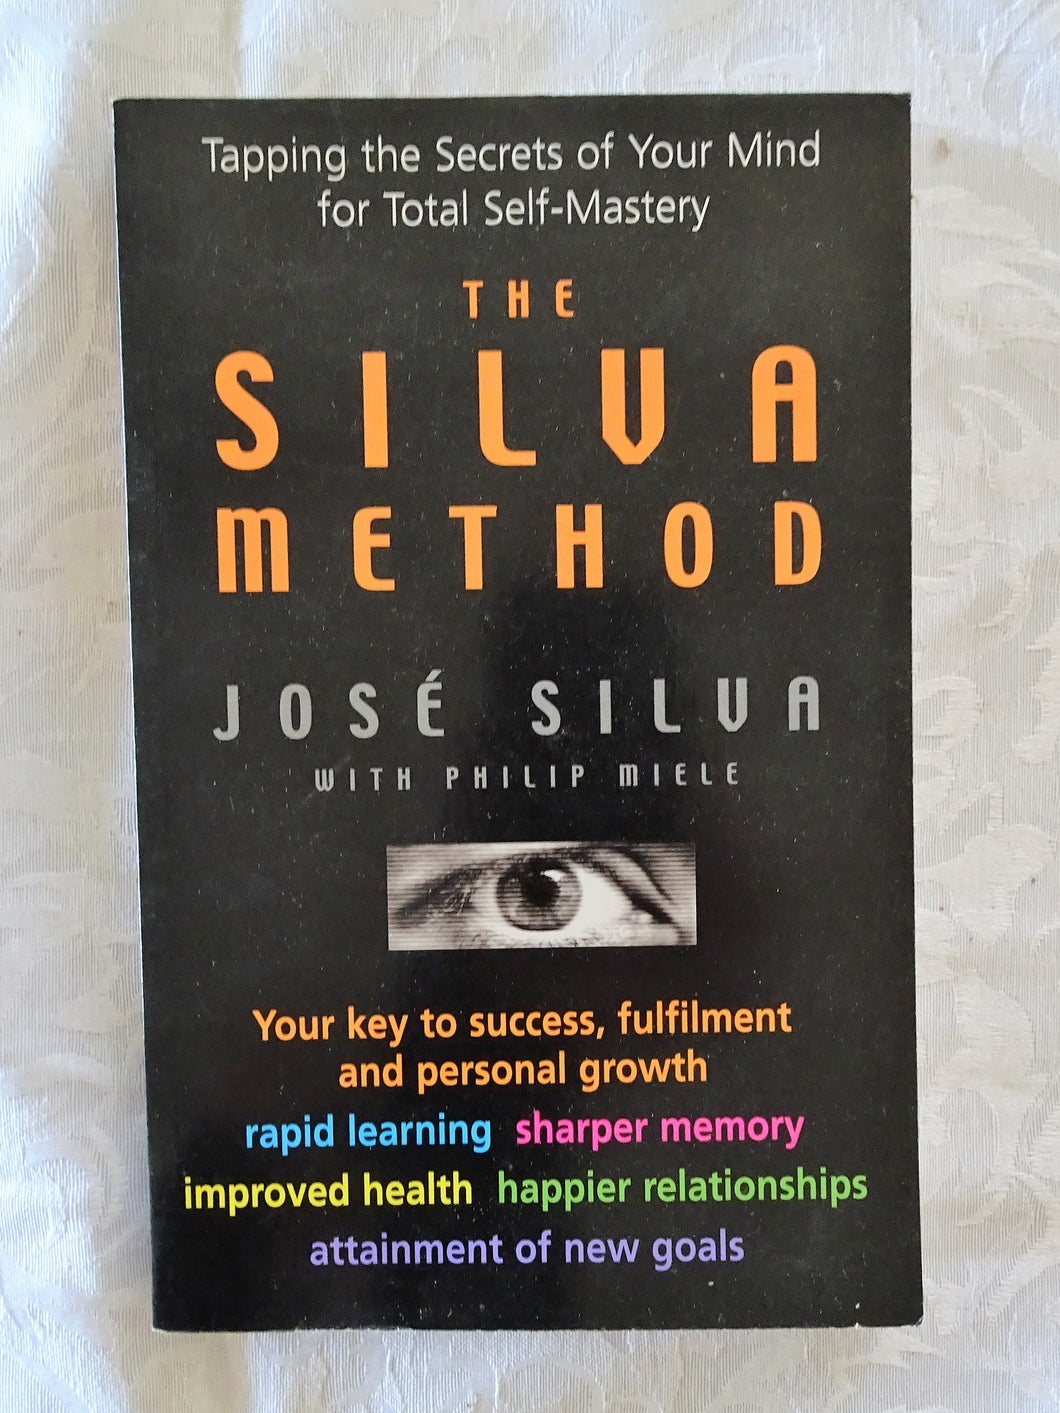 The Silva Method by Jose Silva and Philip Miele